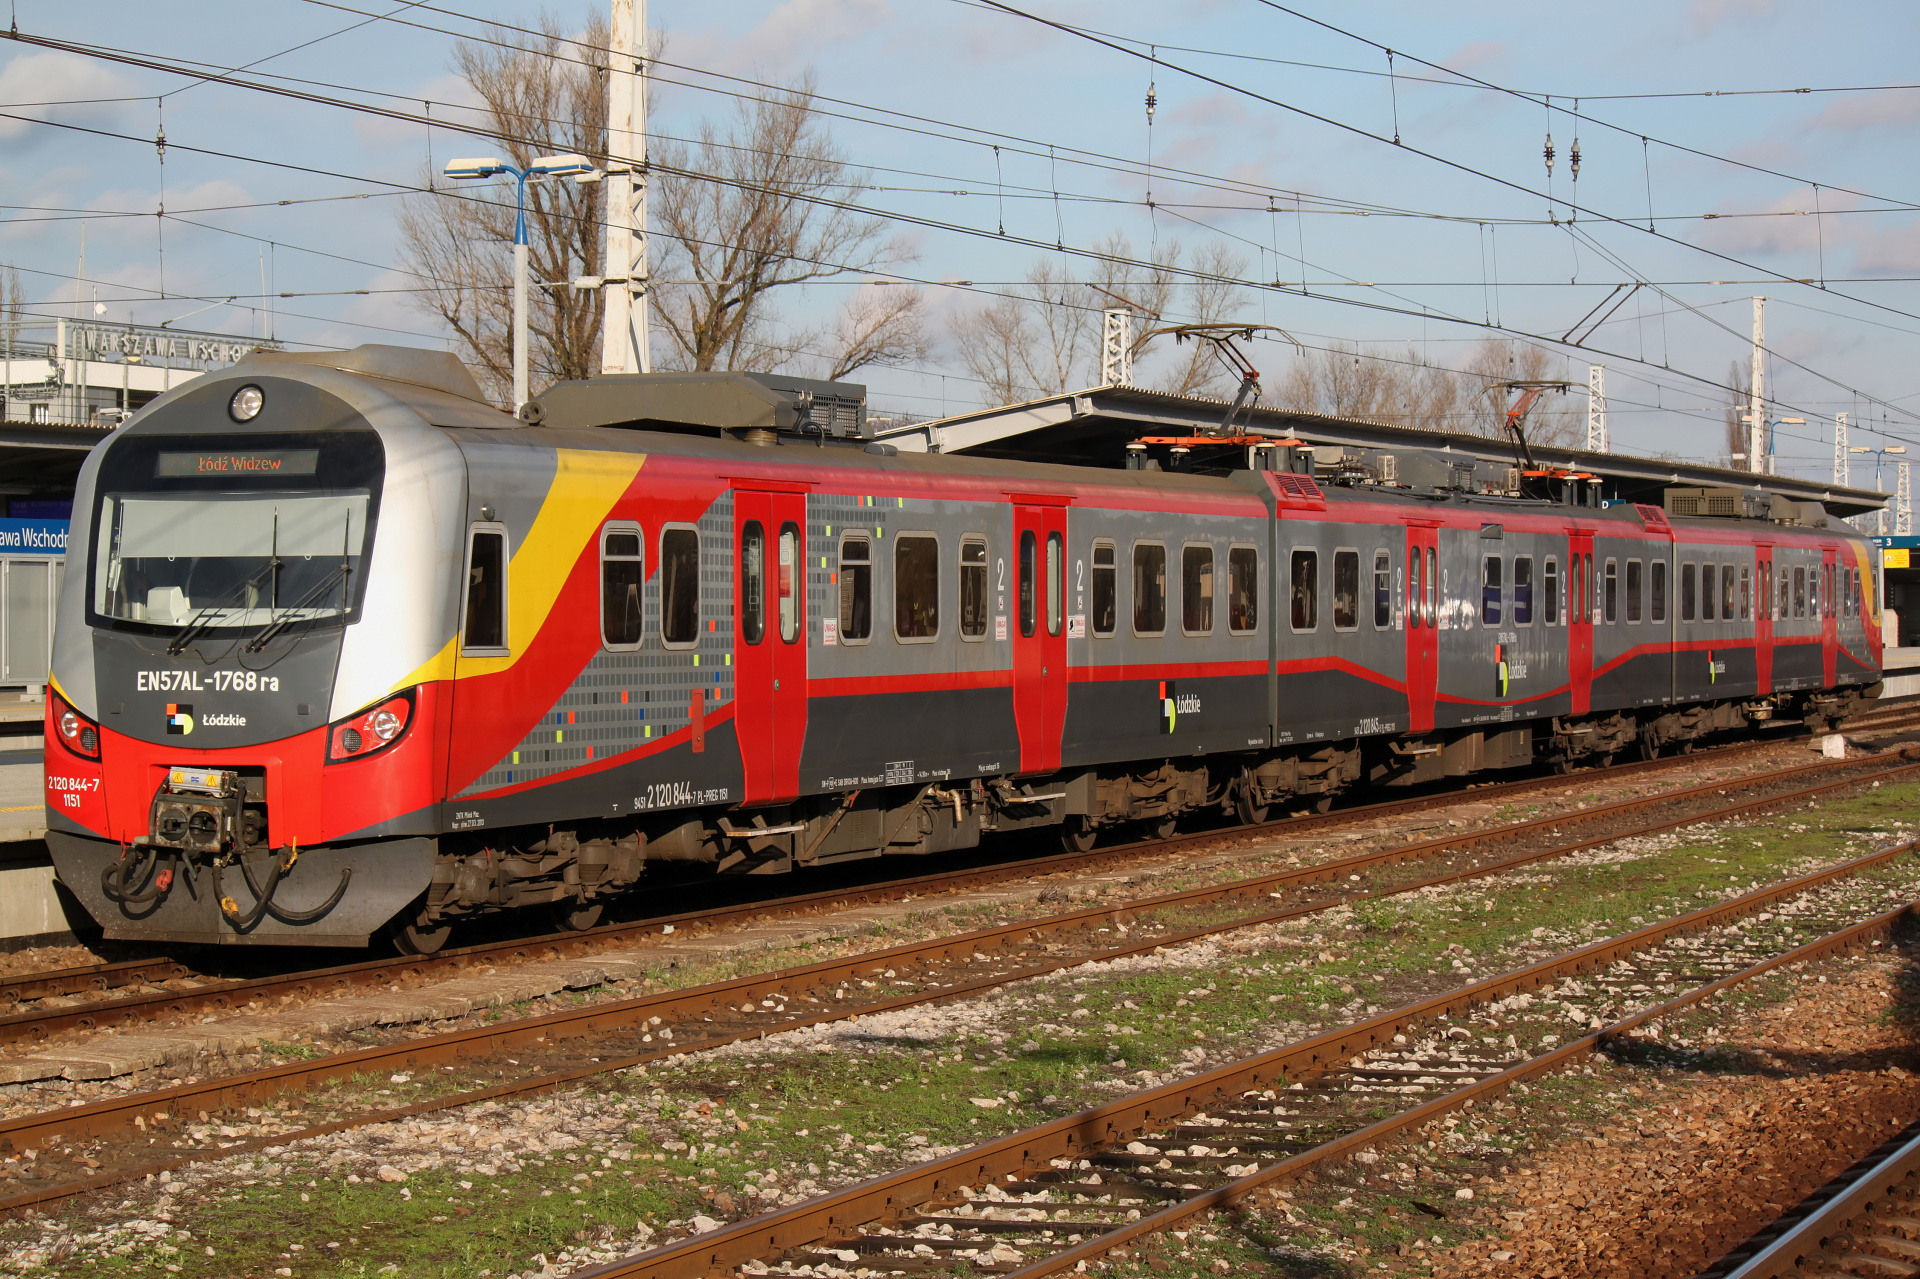 EN57AL-1768 (Pojazdy » Pociągi i lokomotywy » Pafawag 5B/6B EN57 i pochodne)